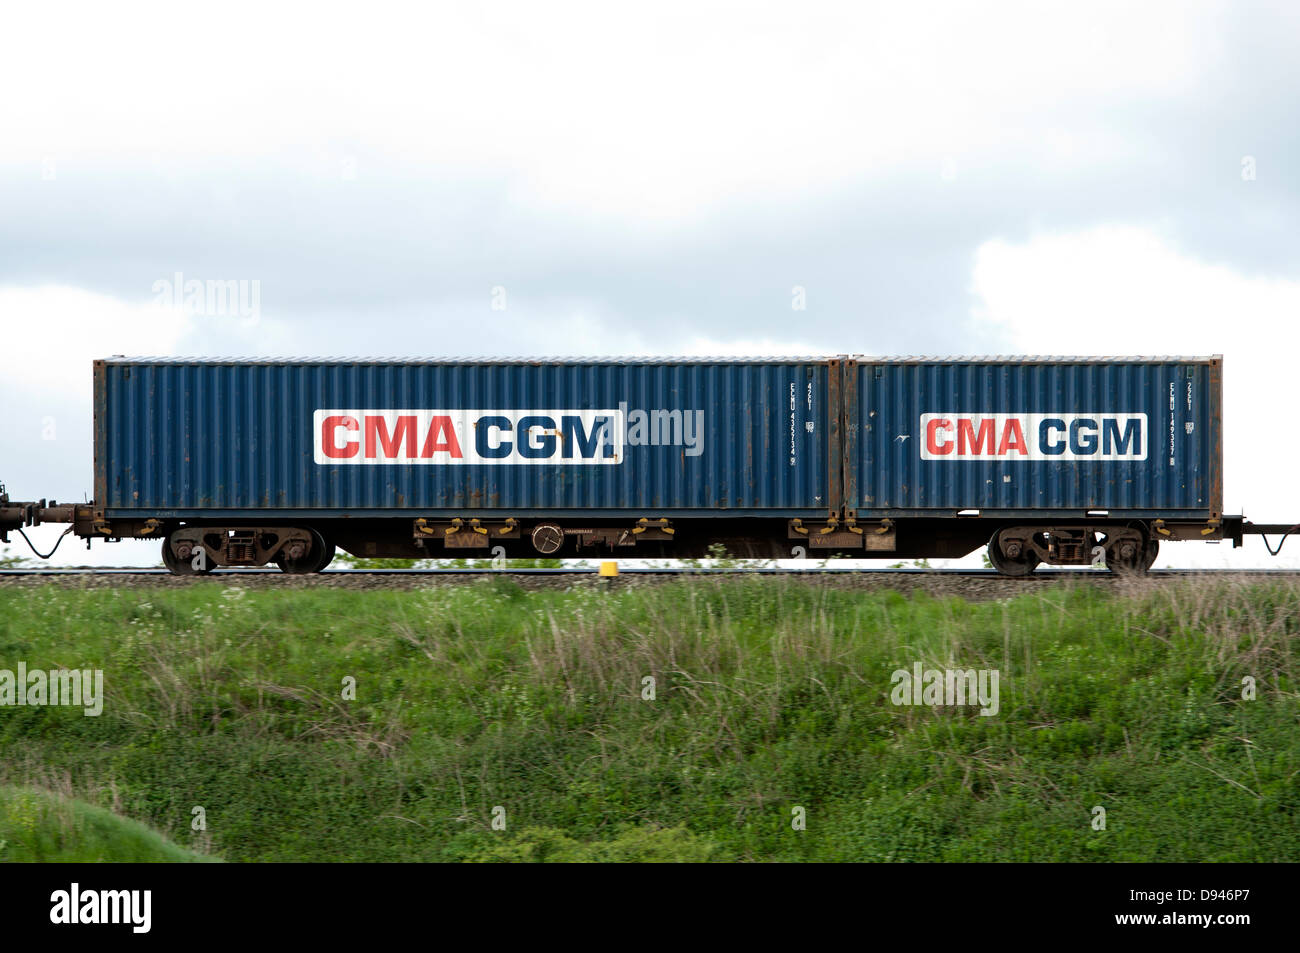 CMA CGM shipping container sur le train Banque D'Images